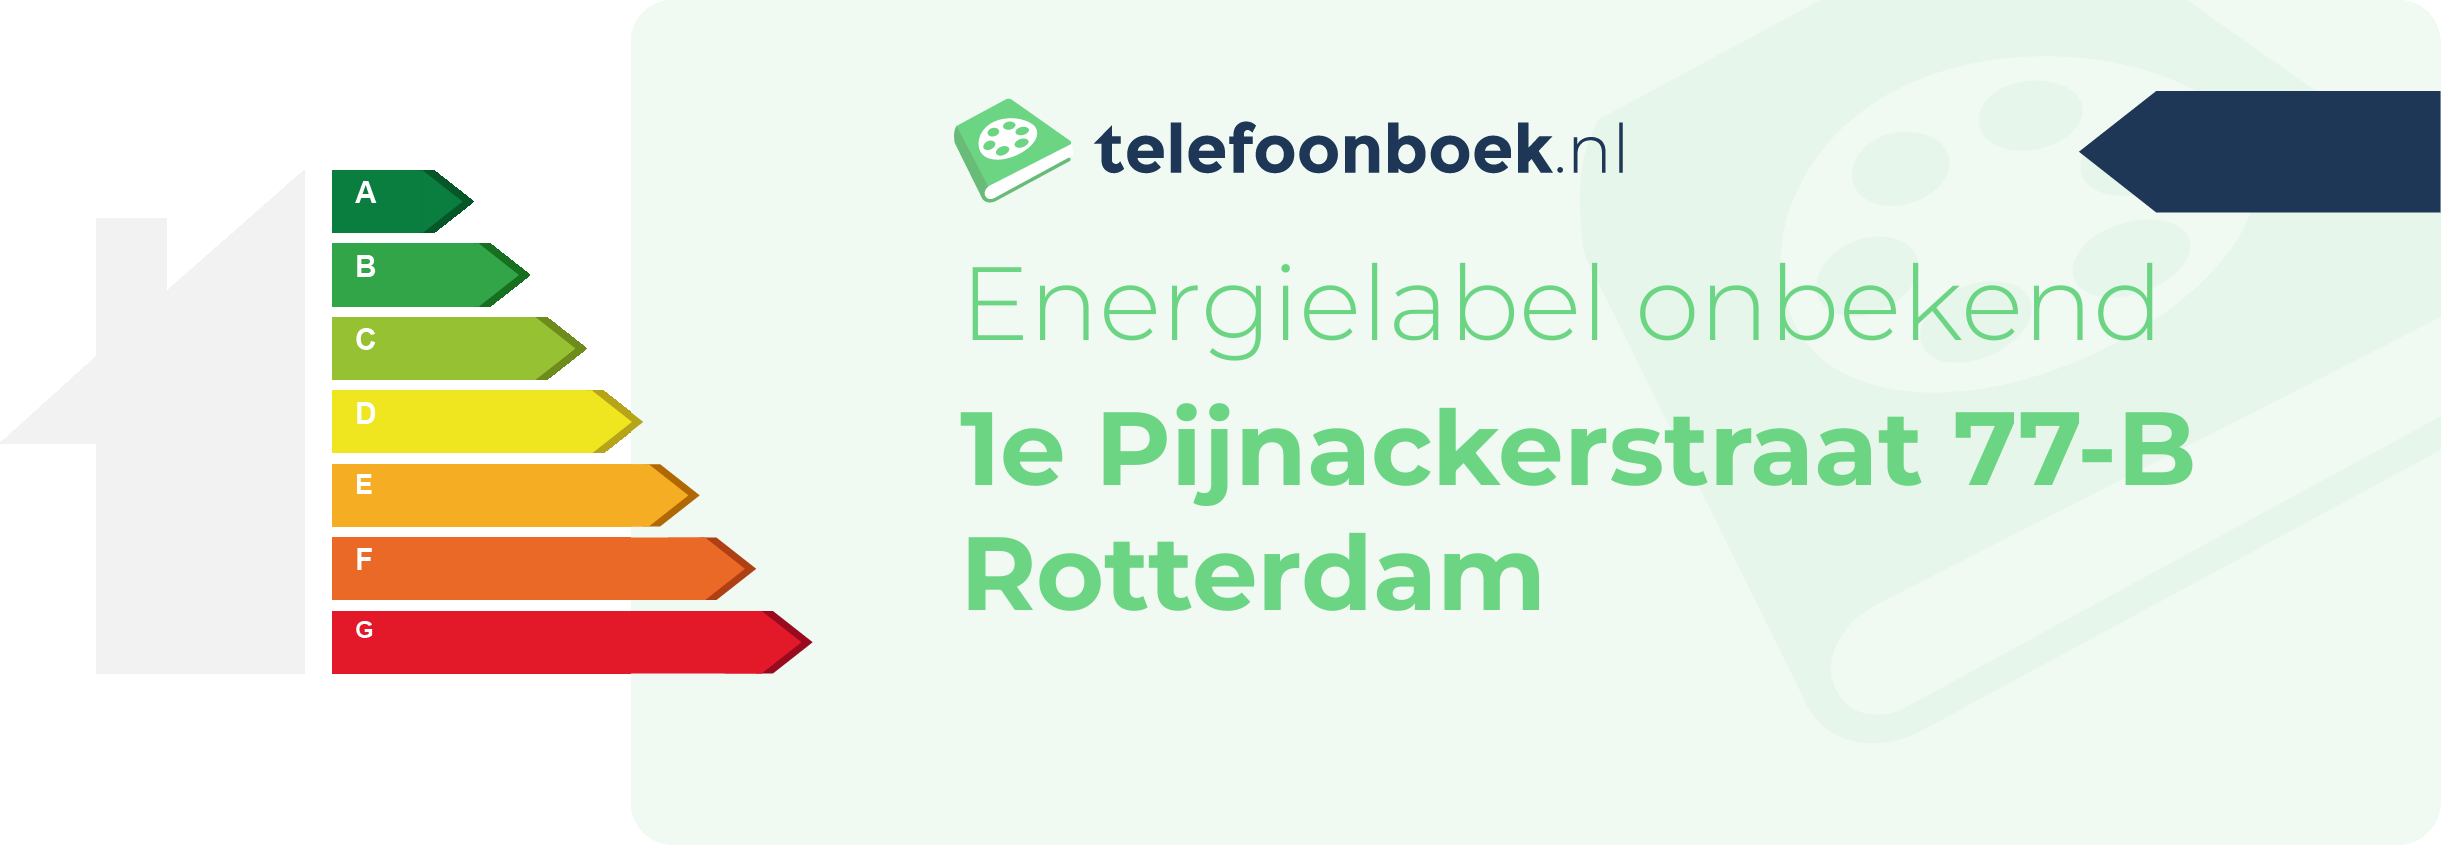 Energielabel 1e Pijnackerstraat 77-B Rotterdam